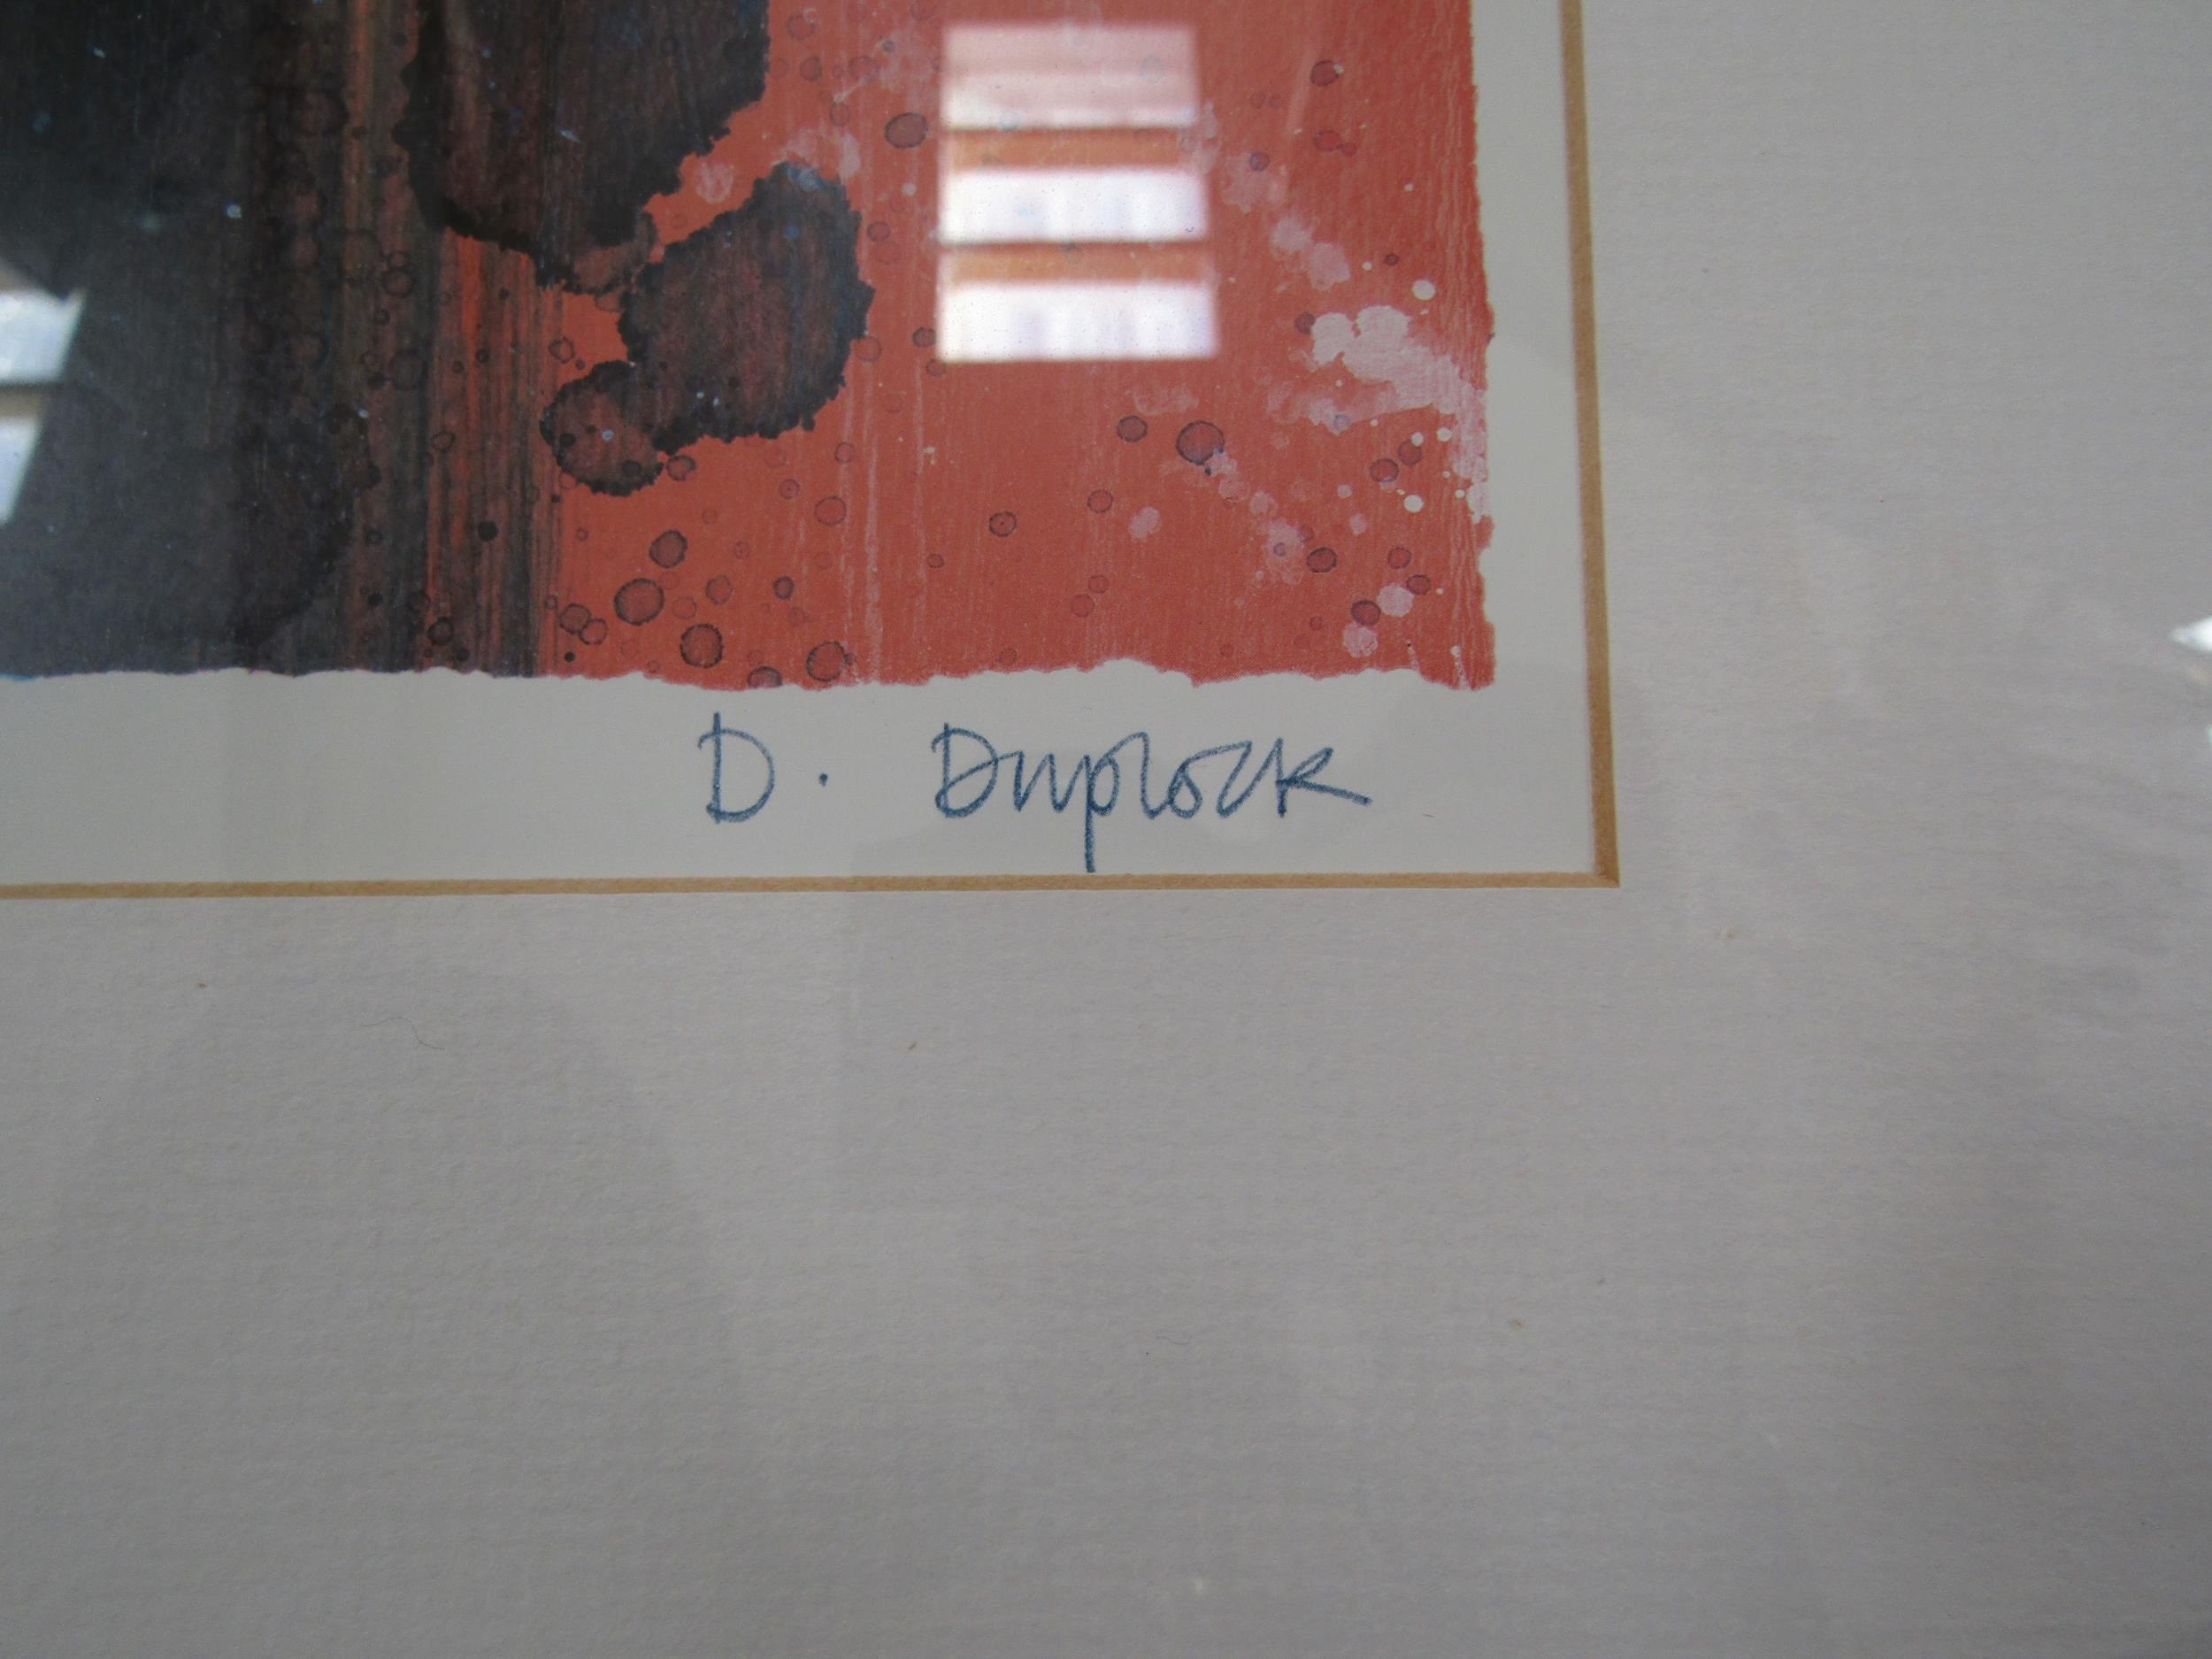 Three Denise Duplock framed original abstract art prints, signed. Image sizes 29.5cm x 20.5cm - Image 2 of 2